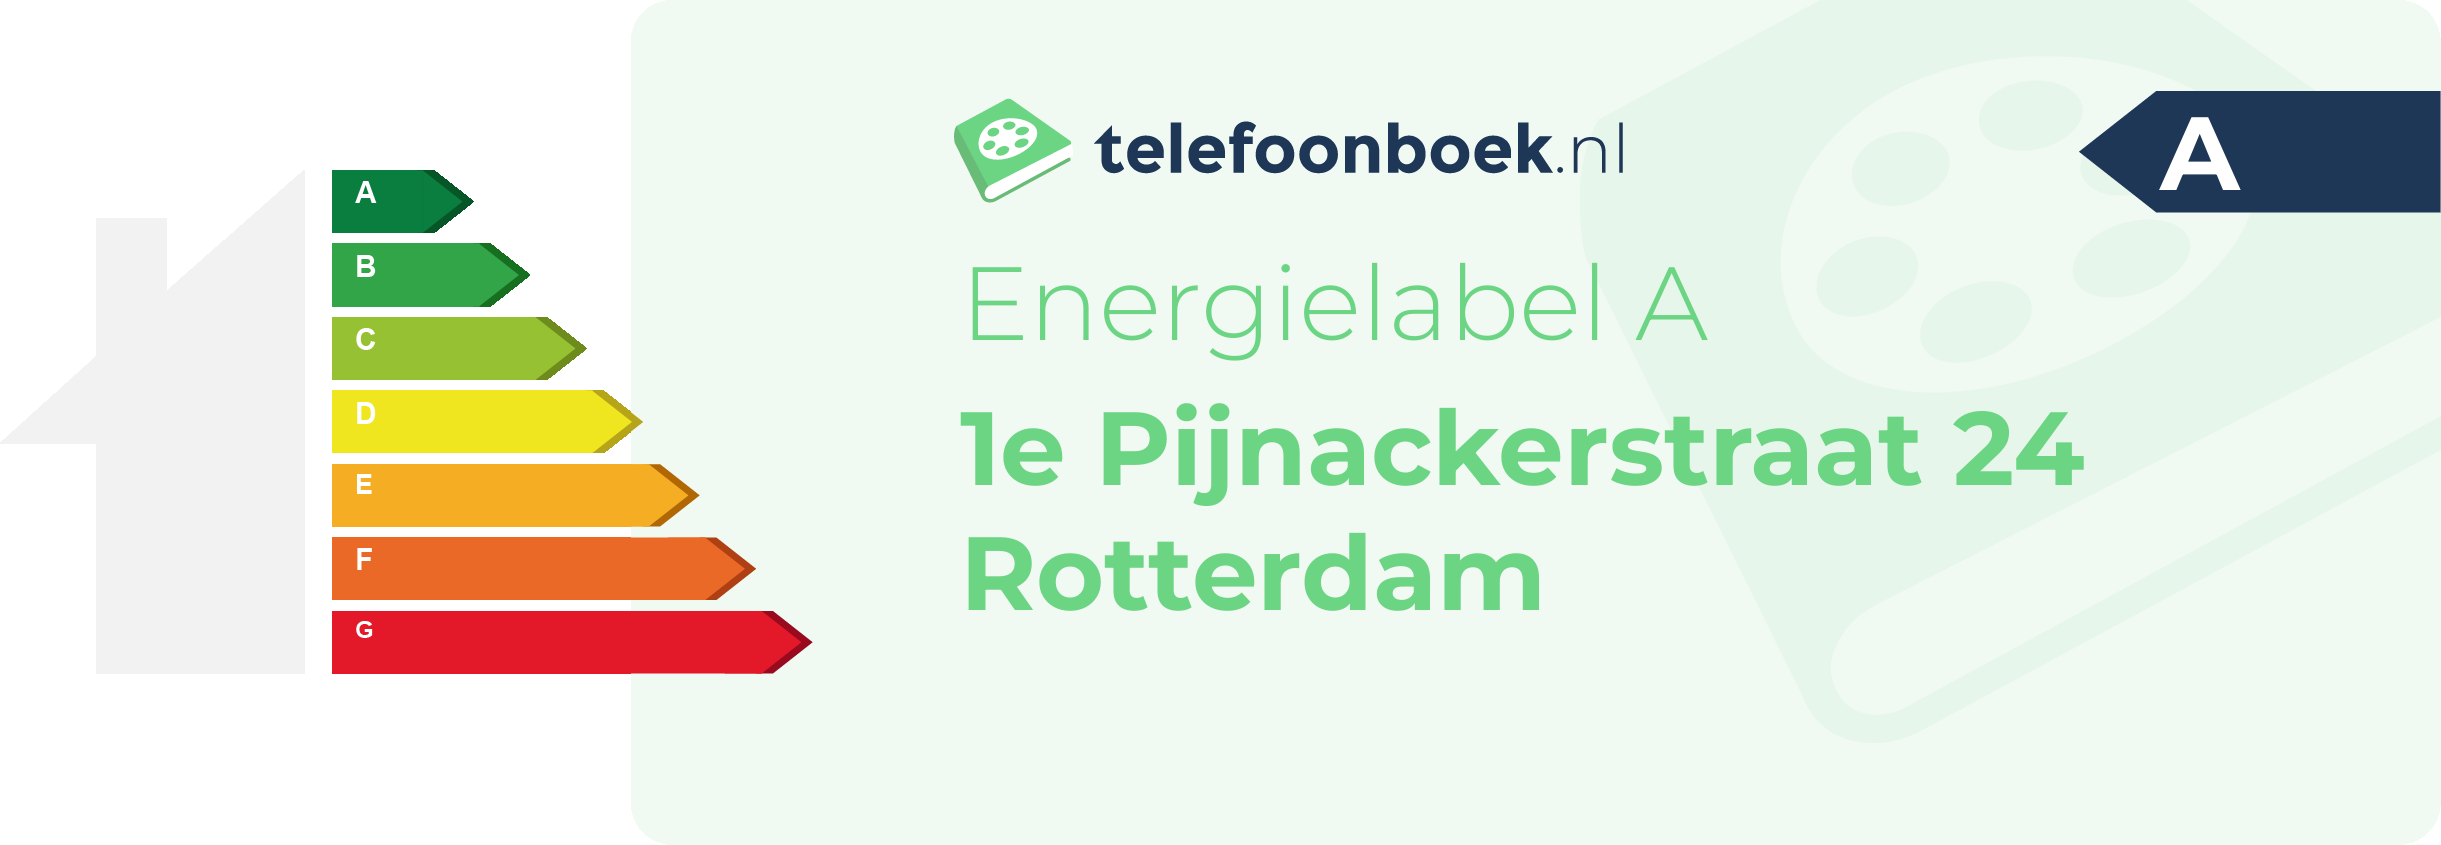 Energielabel 1e Pijnackerstraat 24 Rotterdam